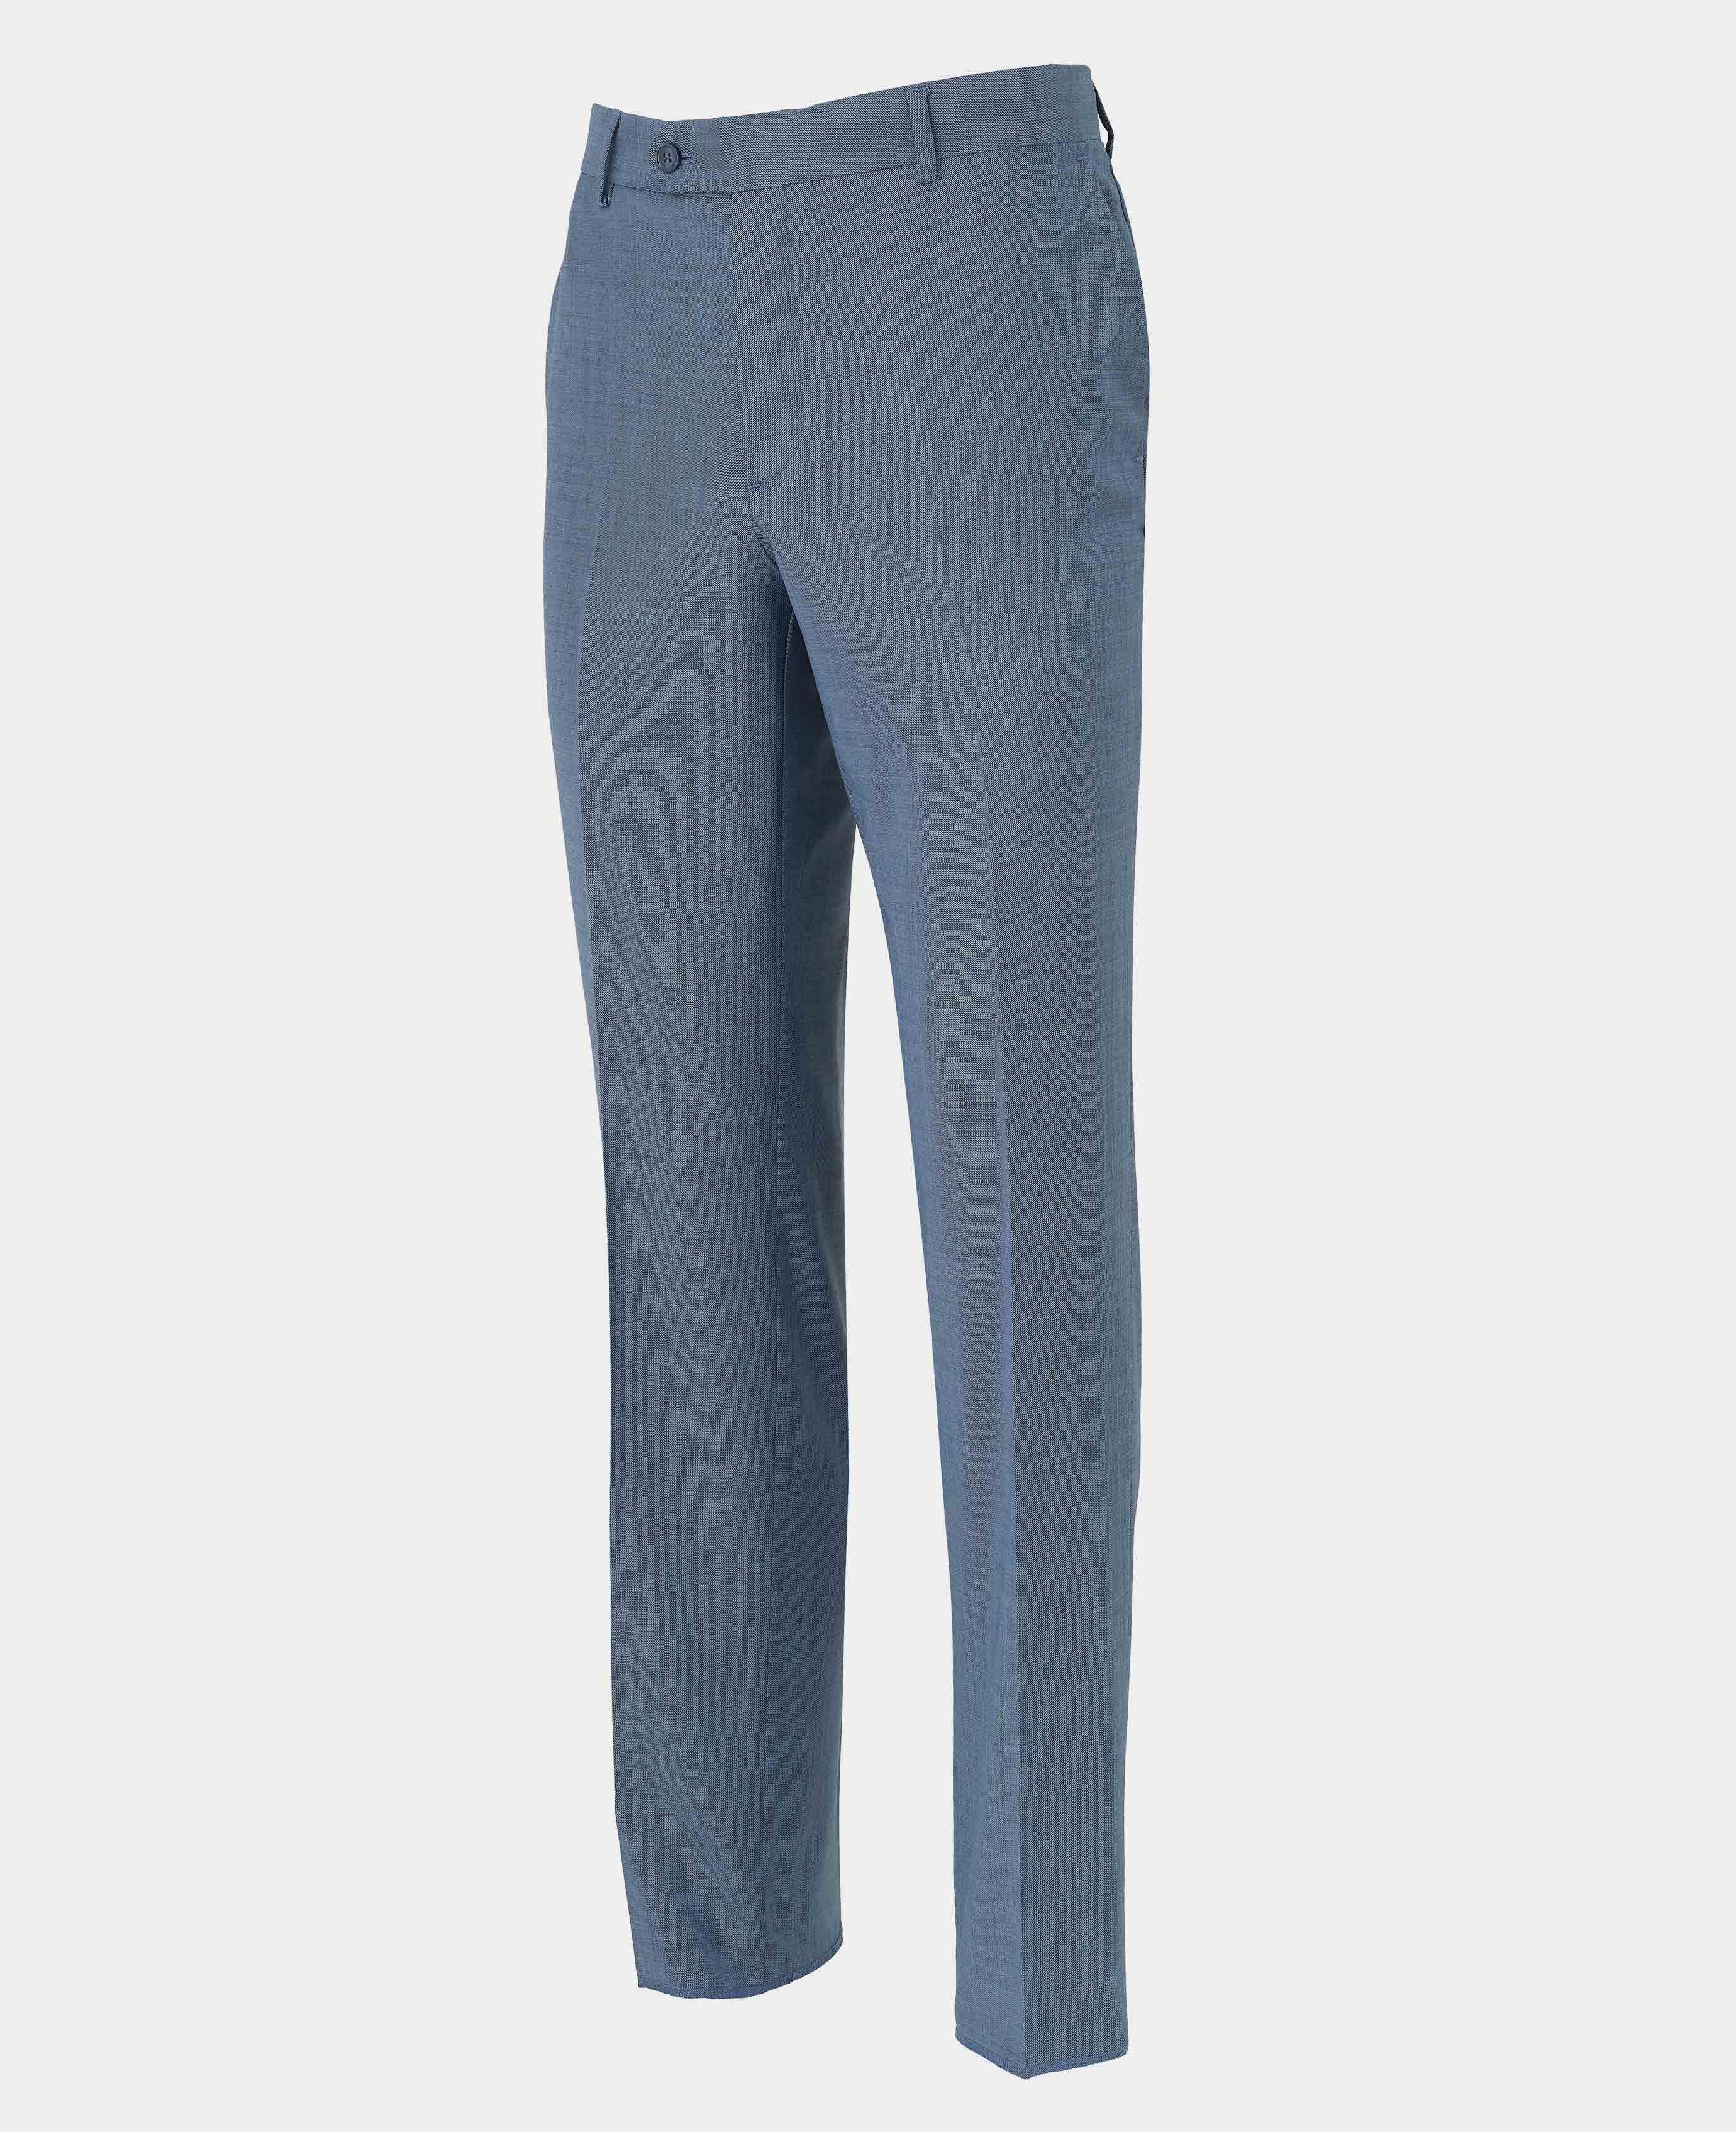 Men’s Wool Blend Suit Trousers in Denim Navy | Savile Row Co